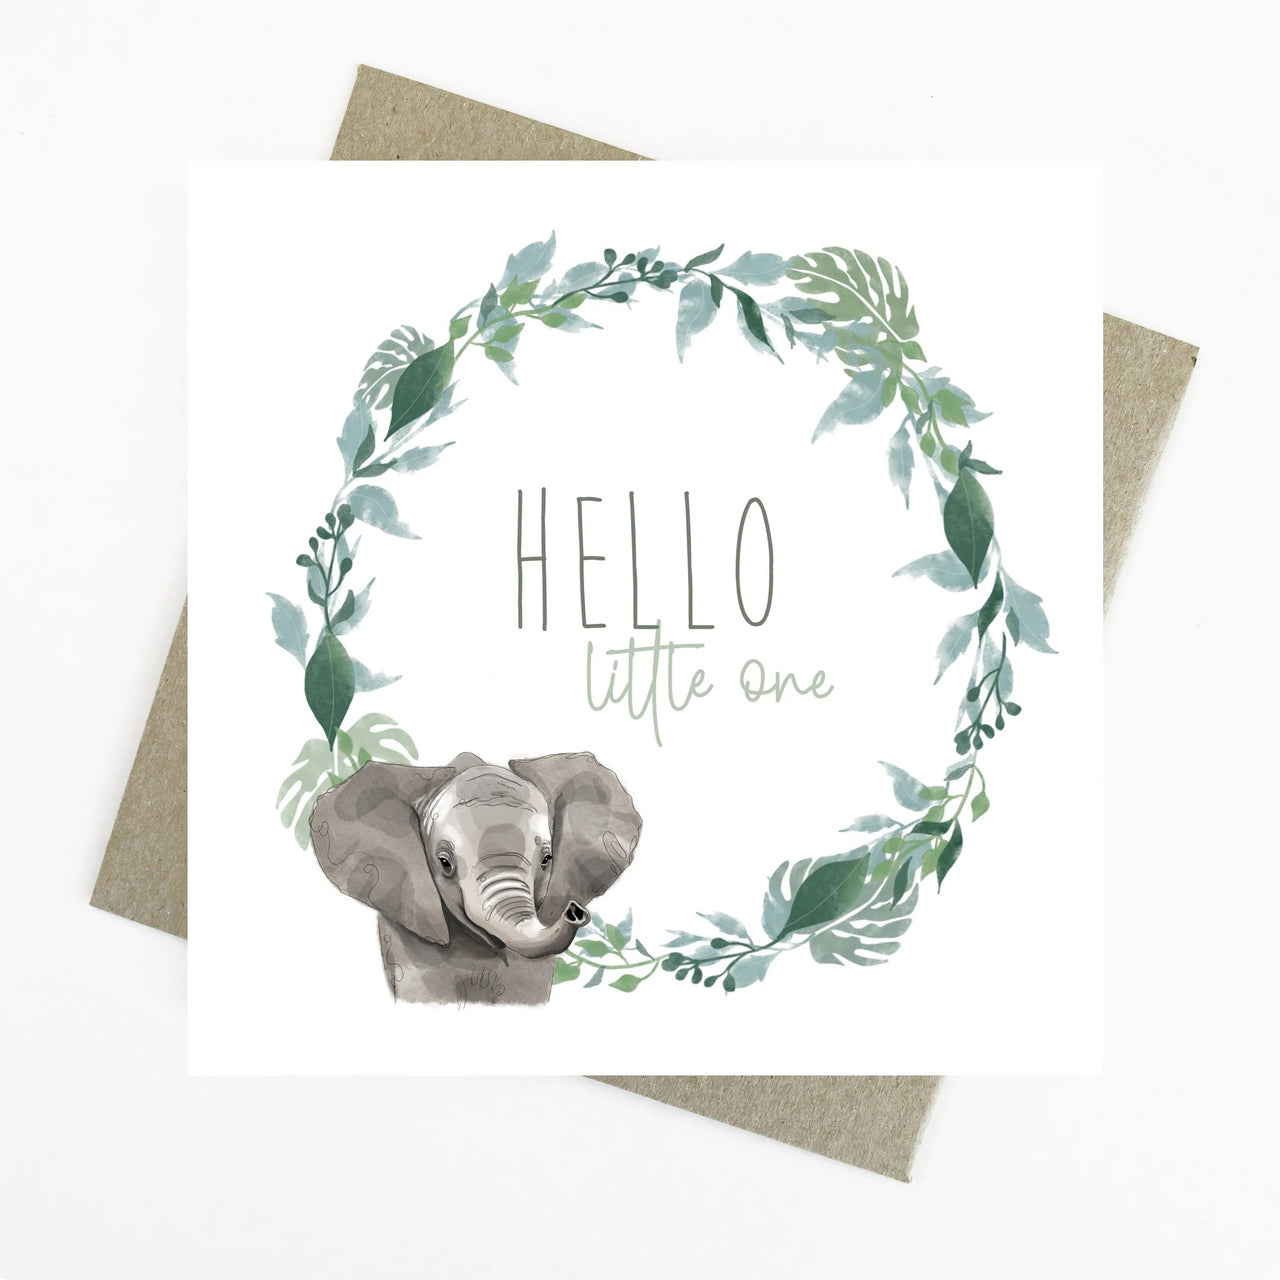 Hello Little One Baby Elephant Safari Animals Greeting Card by Cassie Zaccardo. Australian Art Prints and Homewares. Green Door Decor. www.greendoordecor.com.au